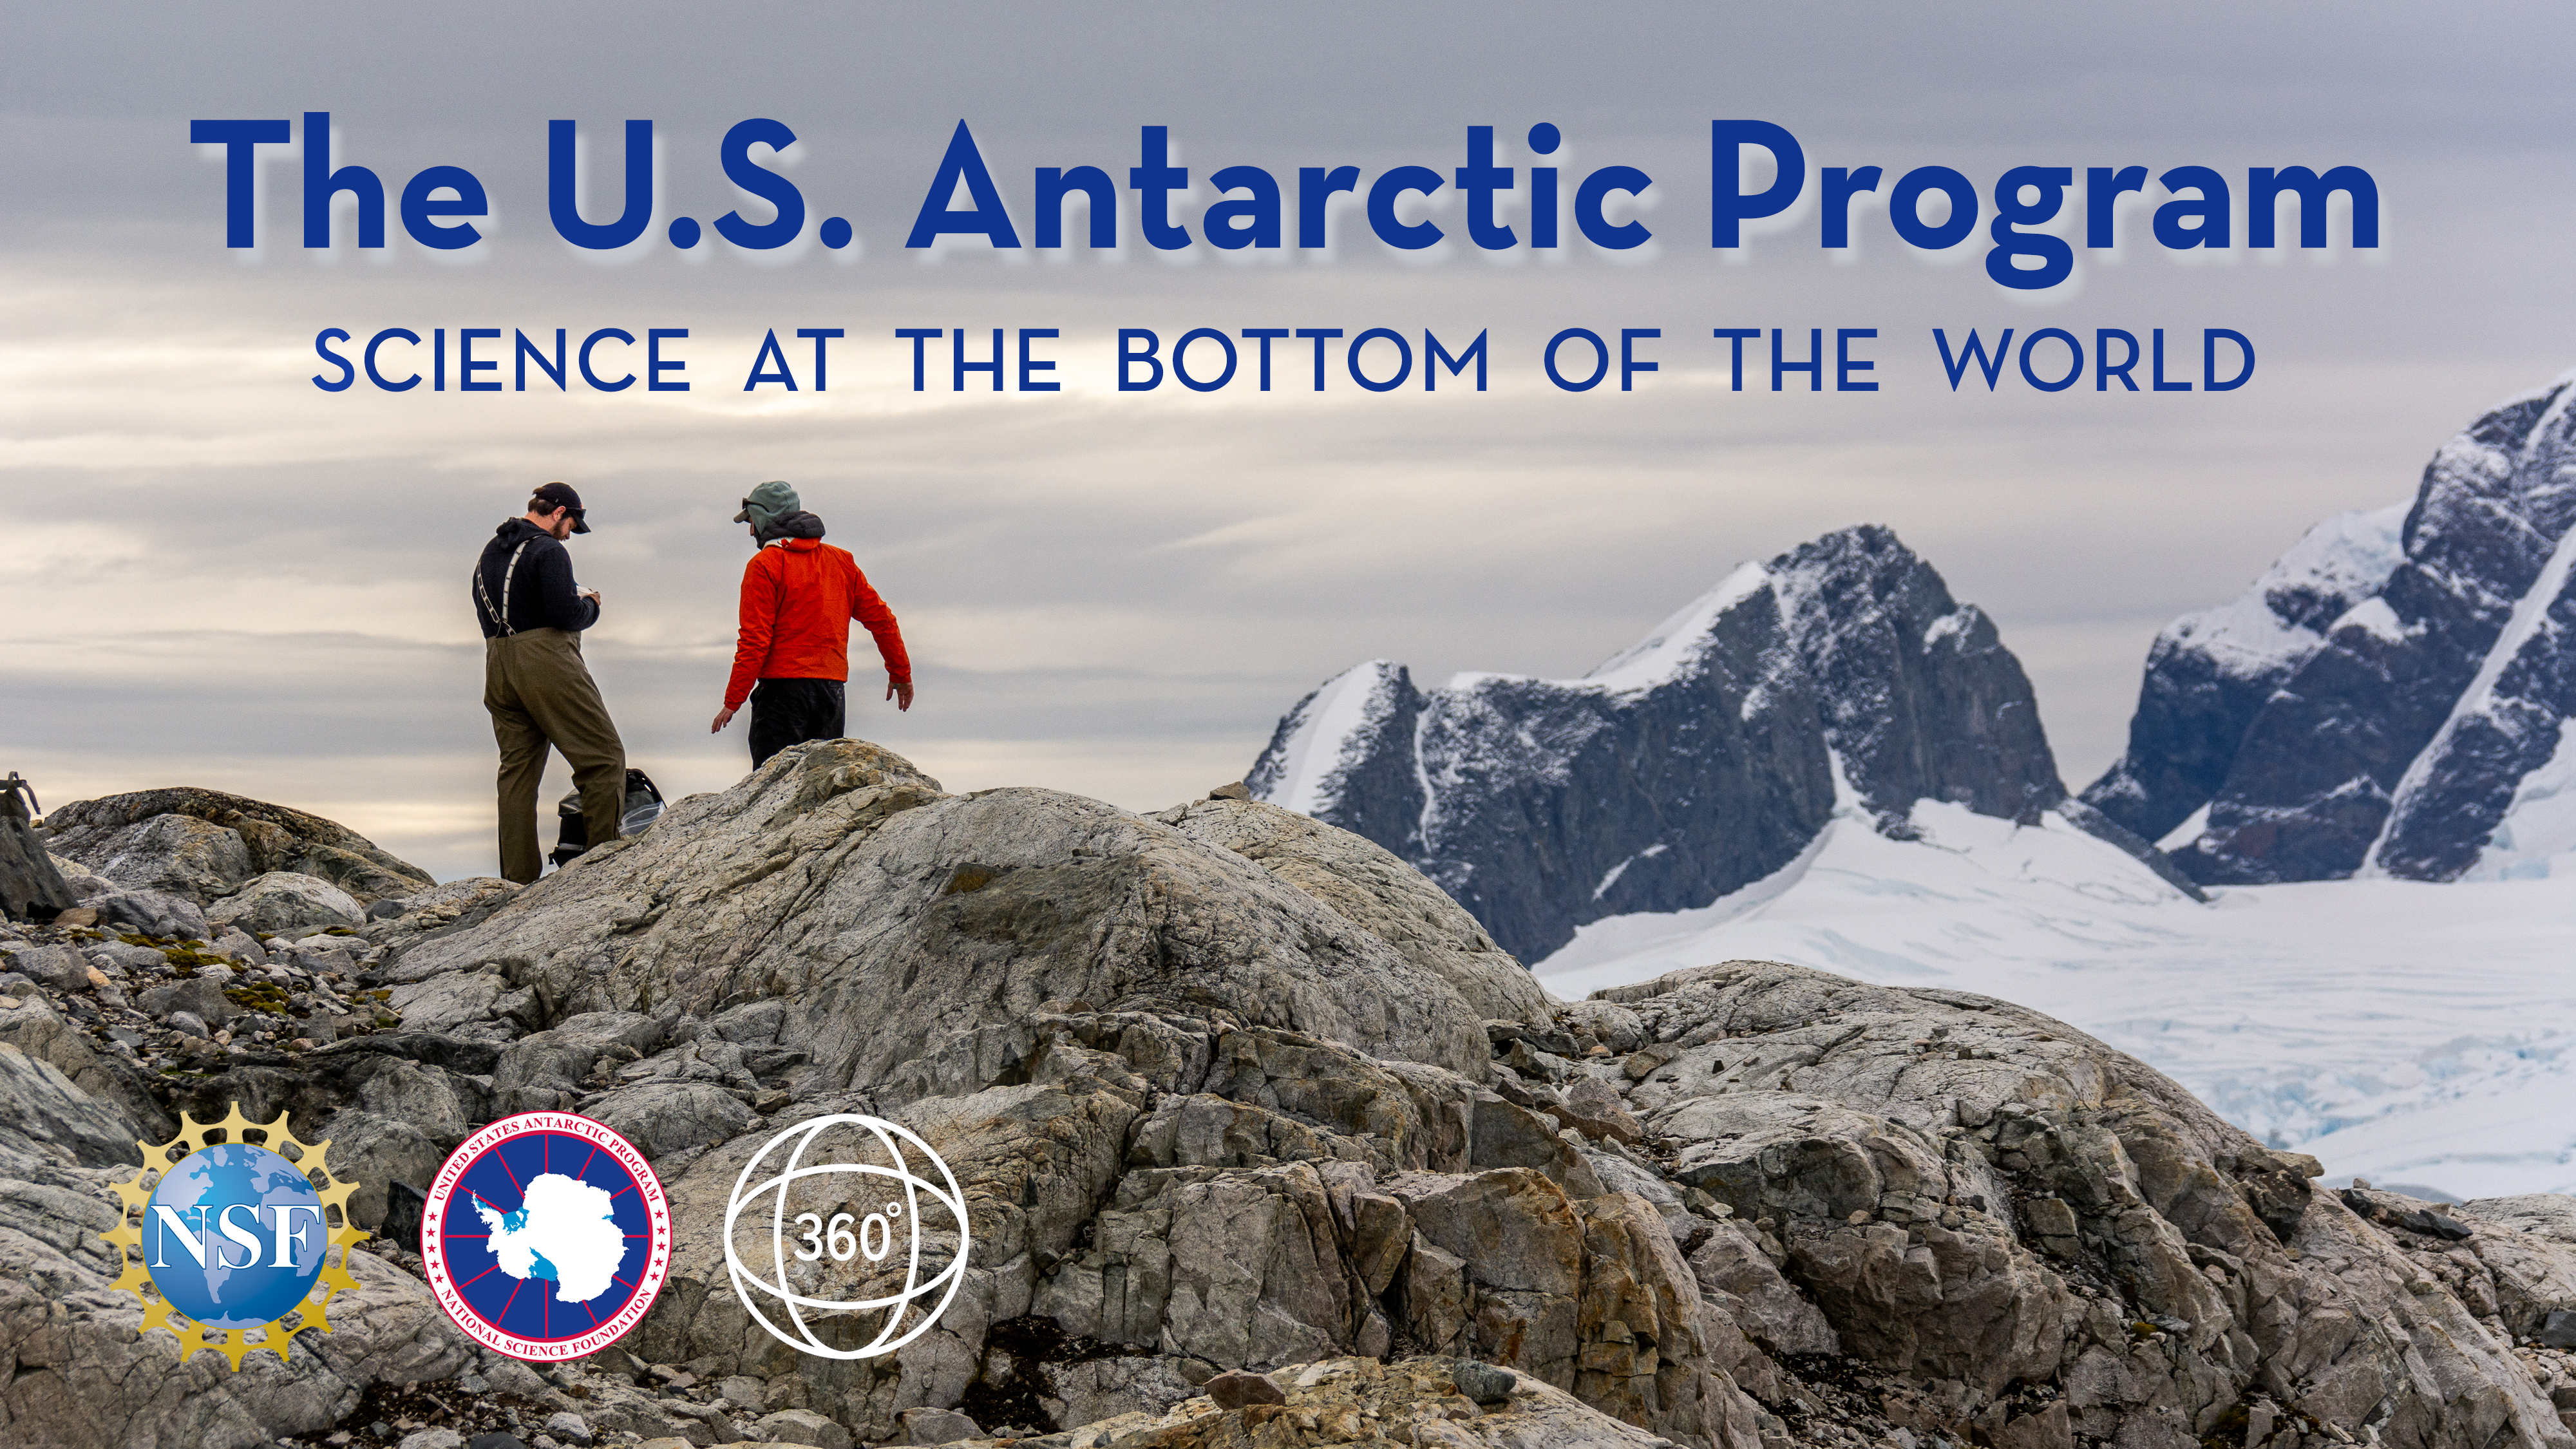 337 U.S. Antarctic Program USAP